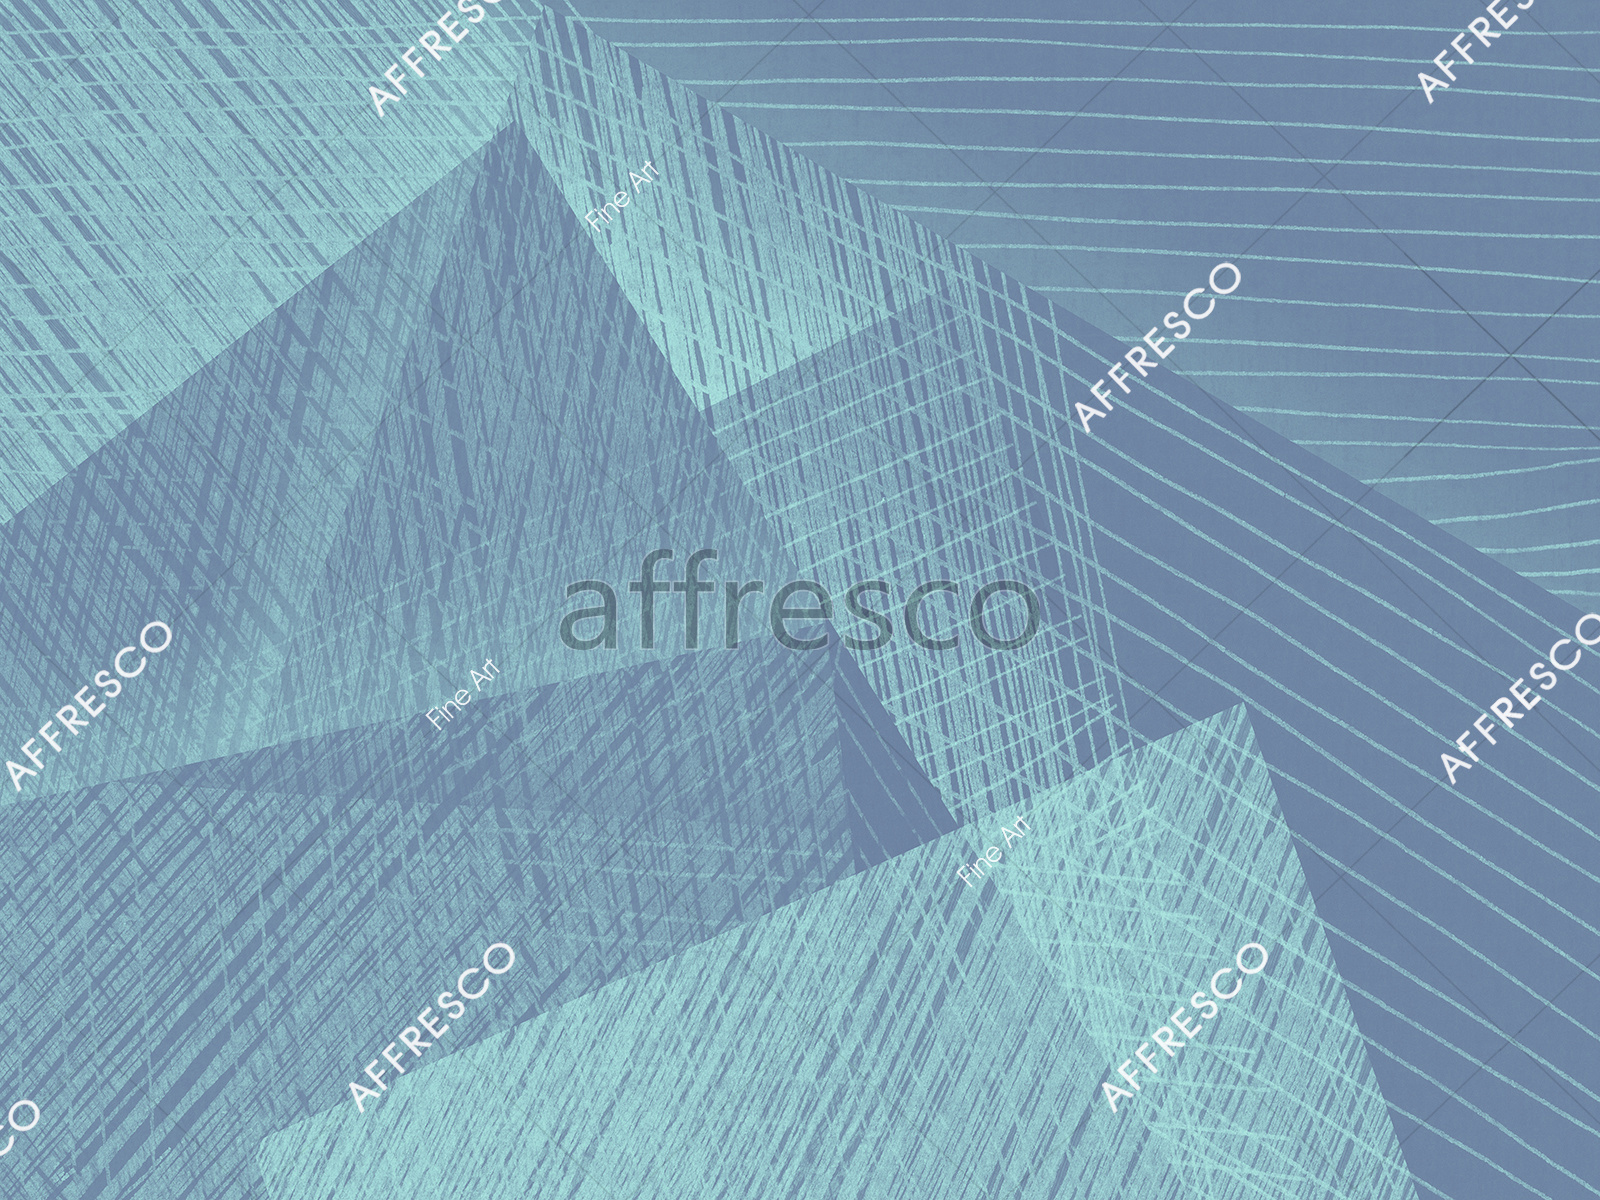 RE832-COL3 | Fine Art | Affresco Factory